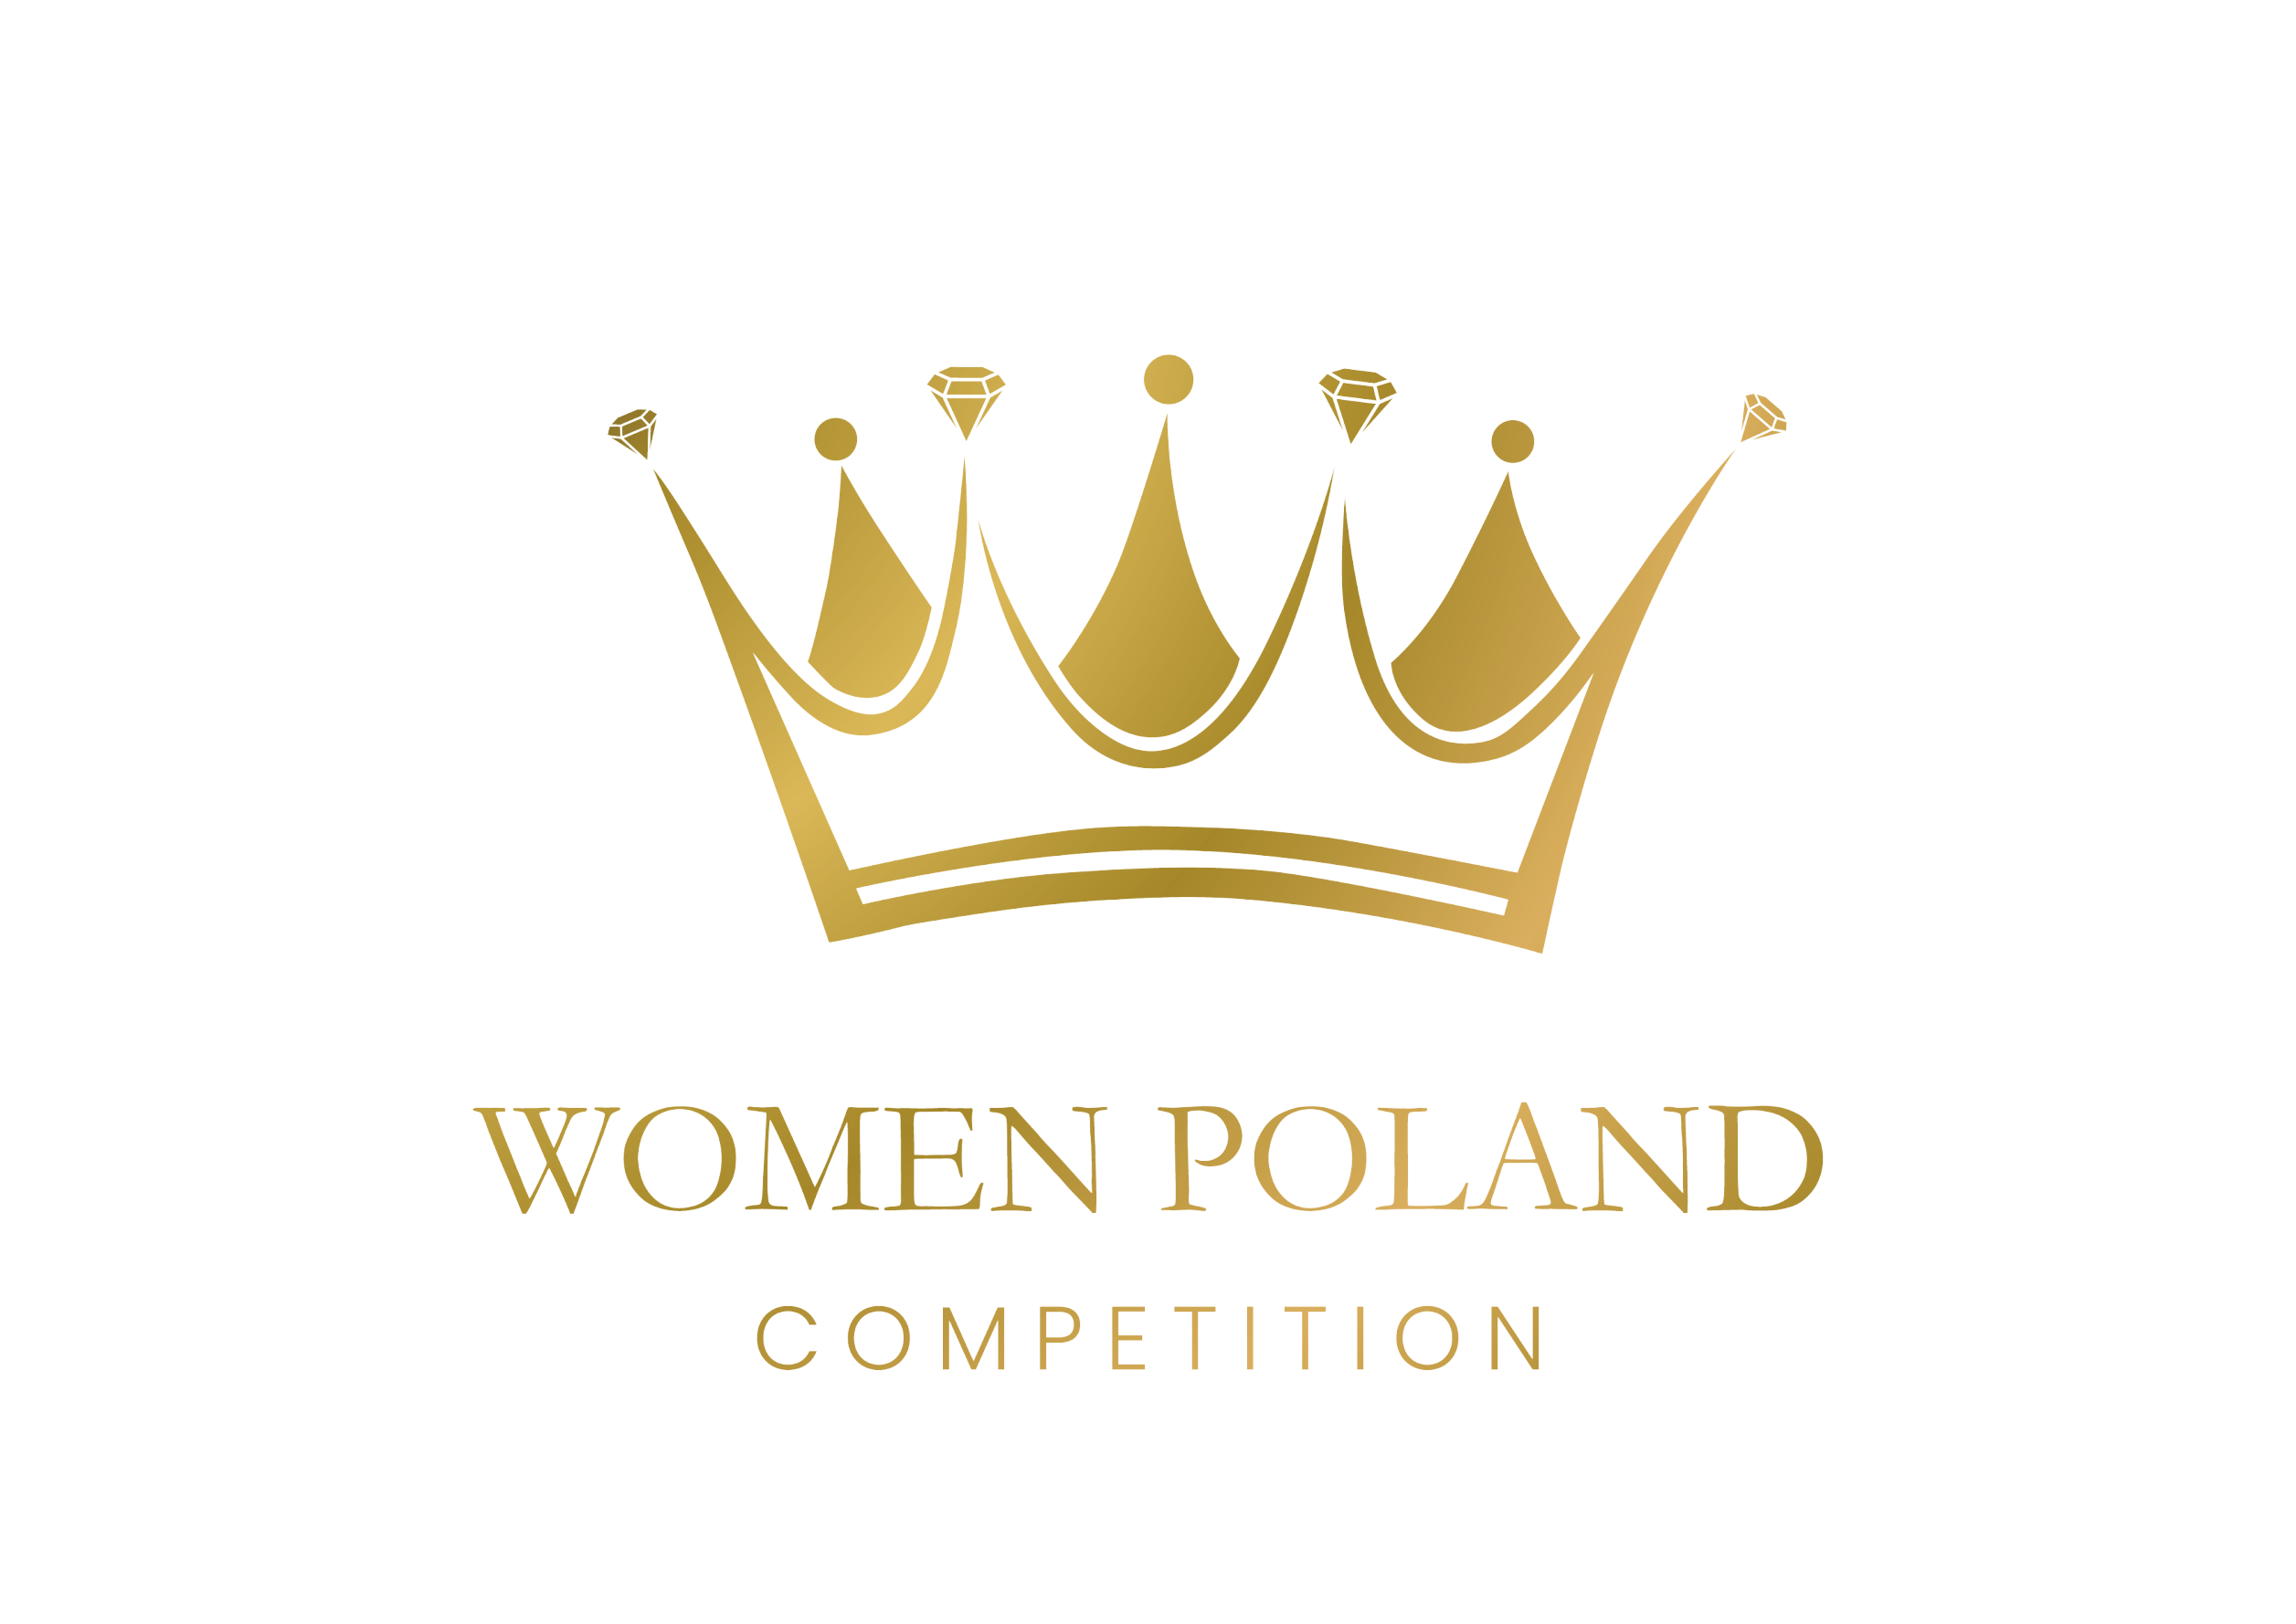 WOMEN POLAND COMPETITION